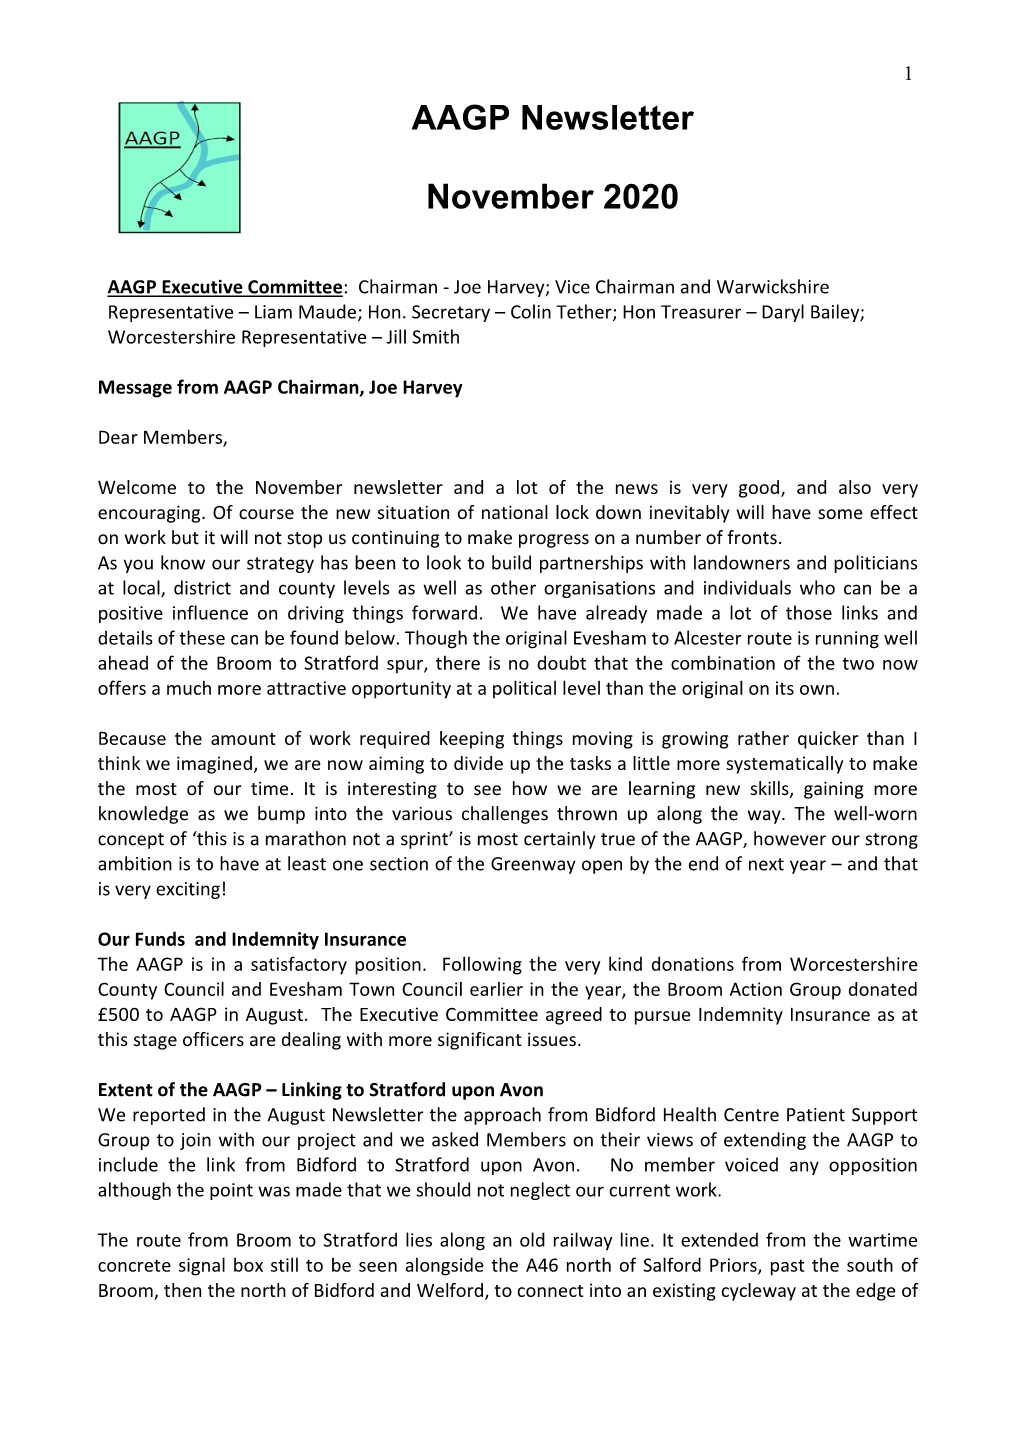 AAGP Newsletter November 2020